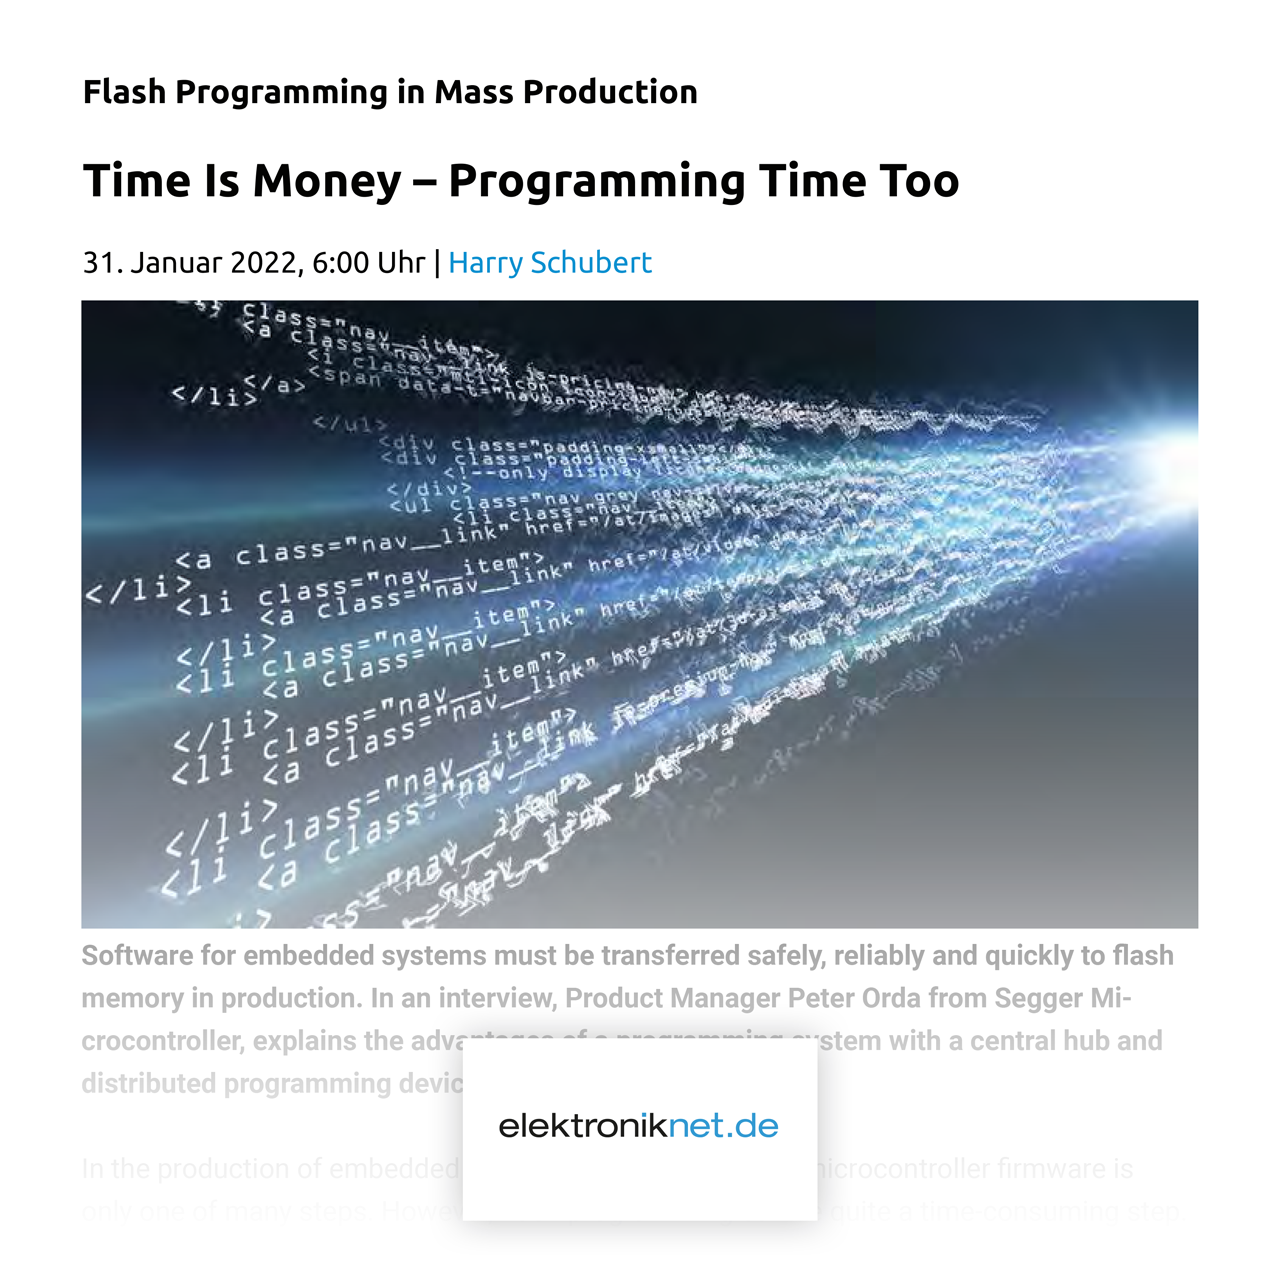 SEGGER Press: Flash programming in mass production